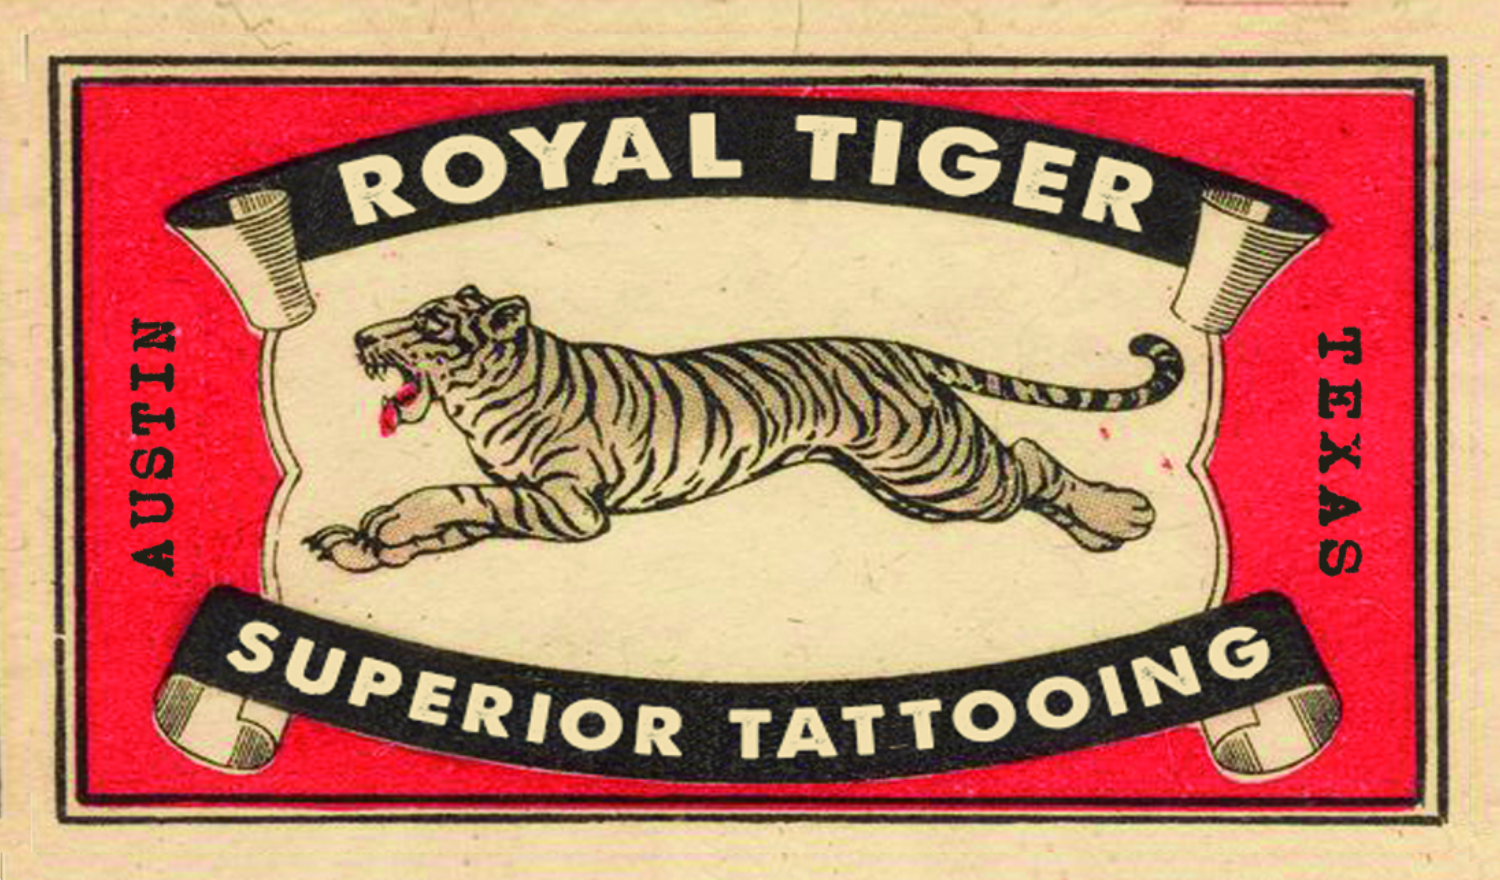 THE SHOP — Royal Tiger Tattoo